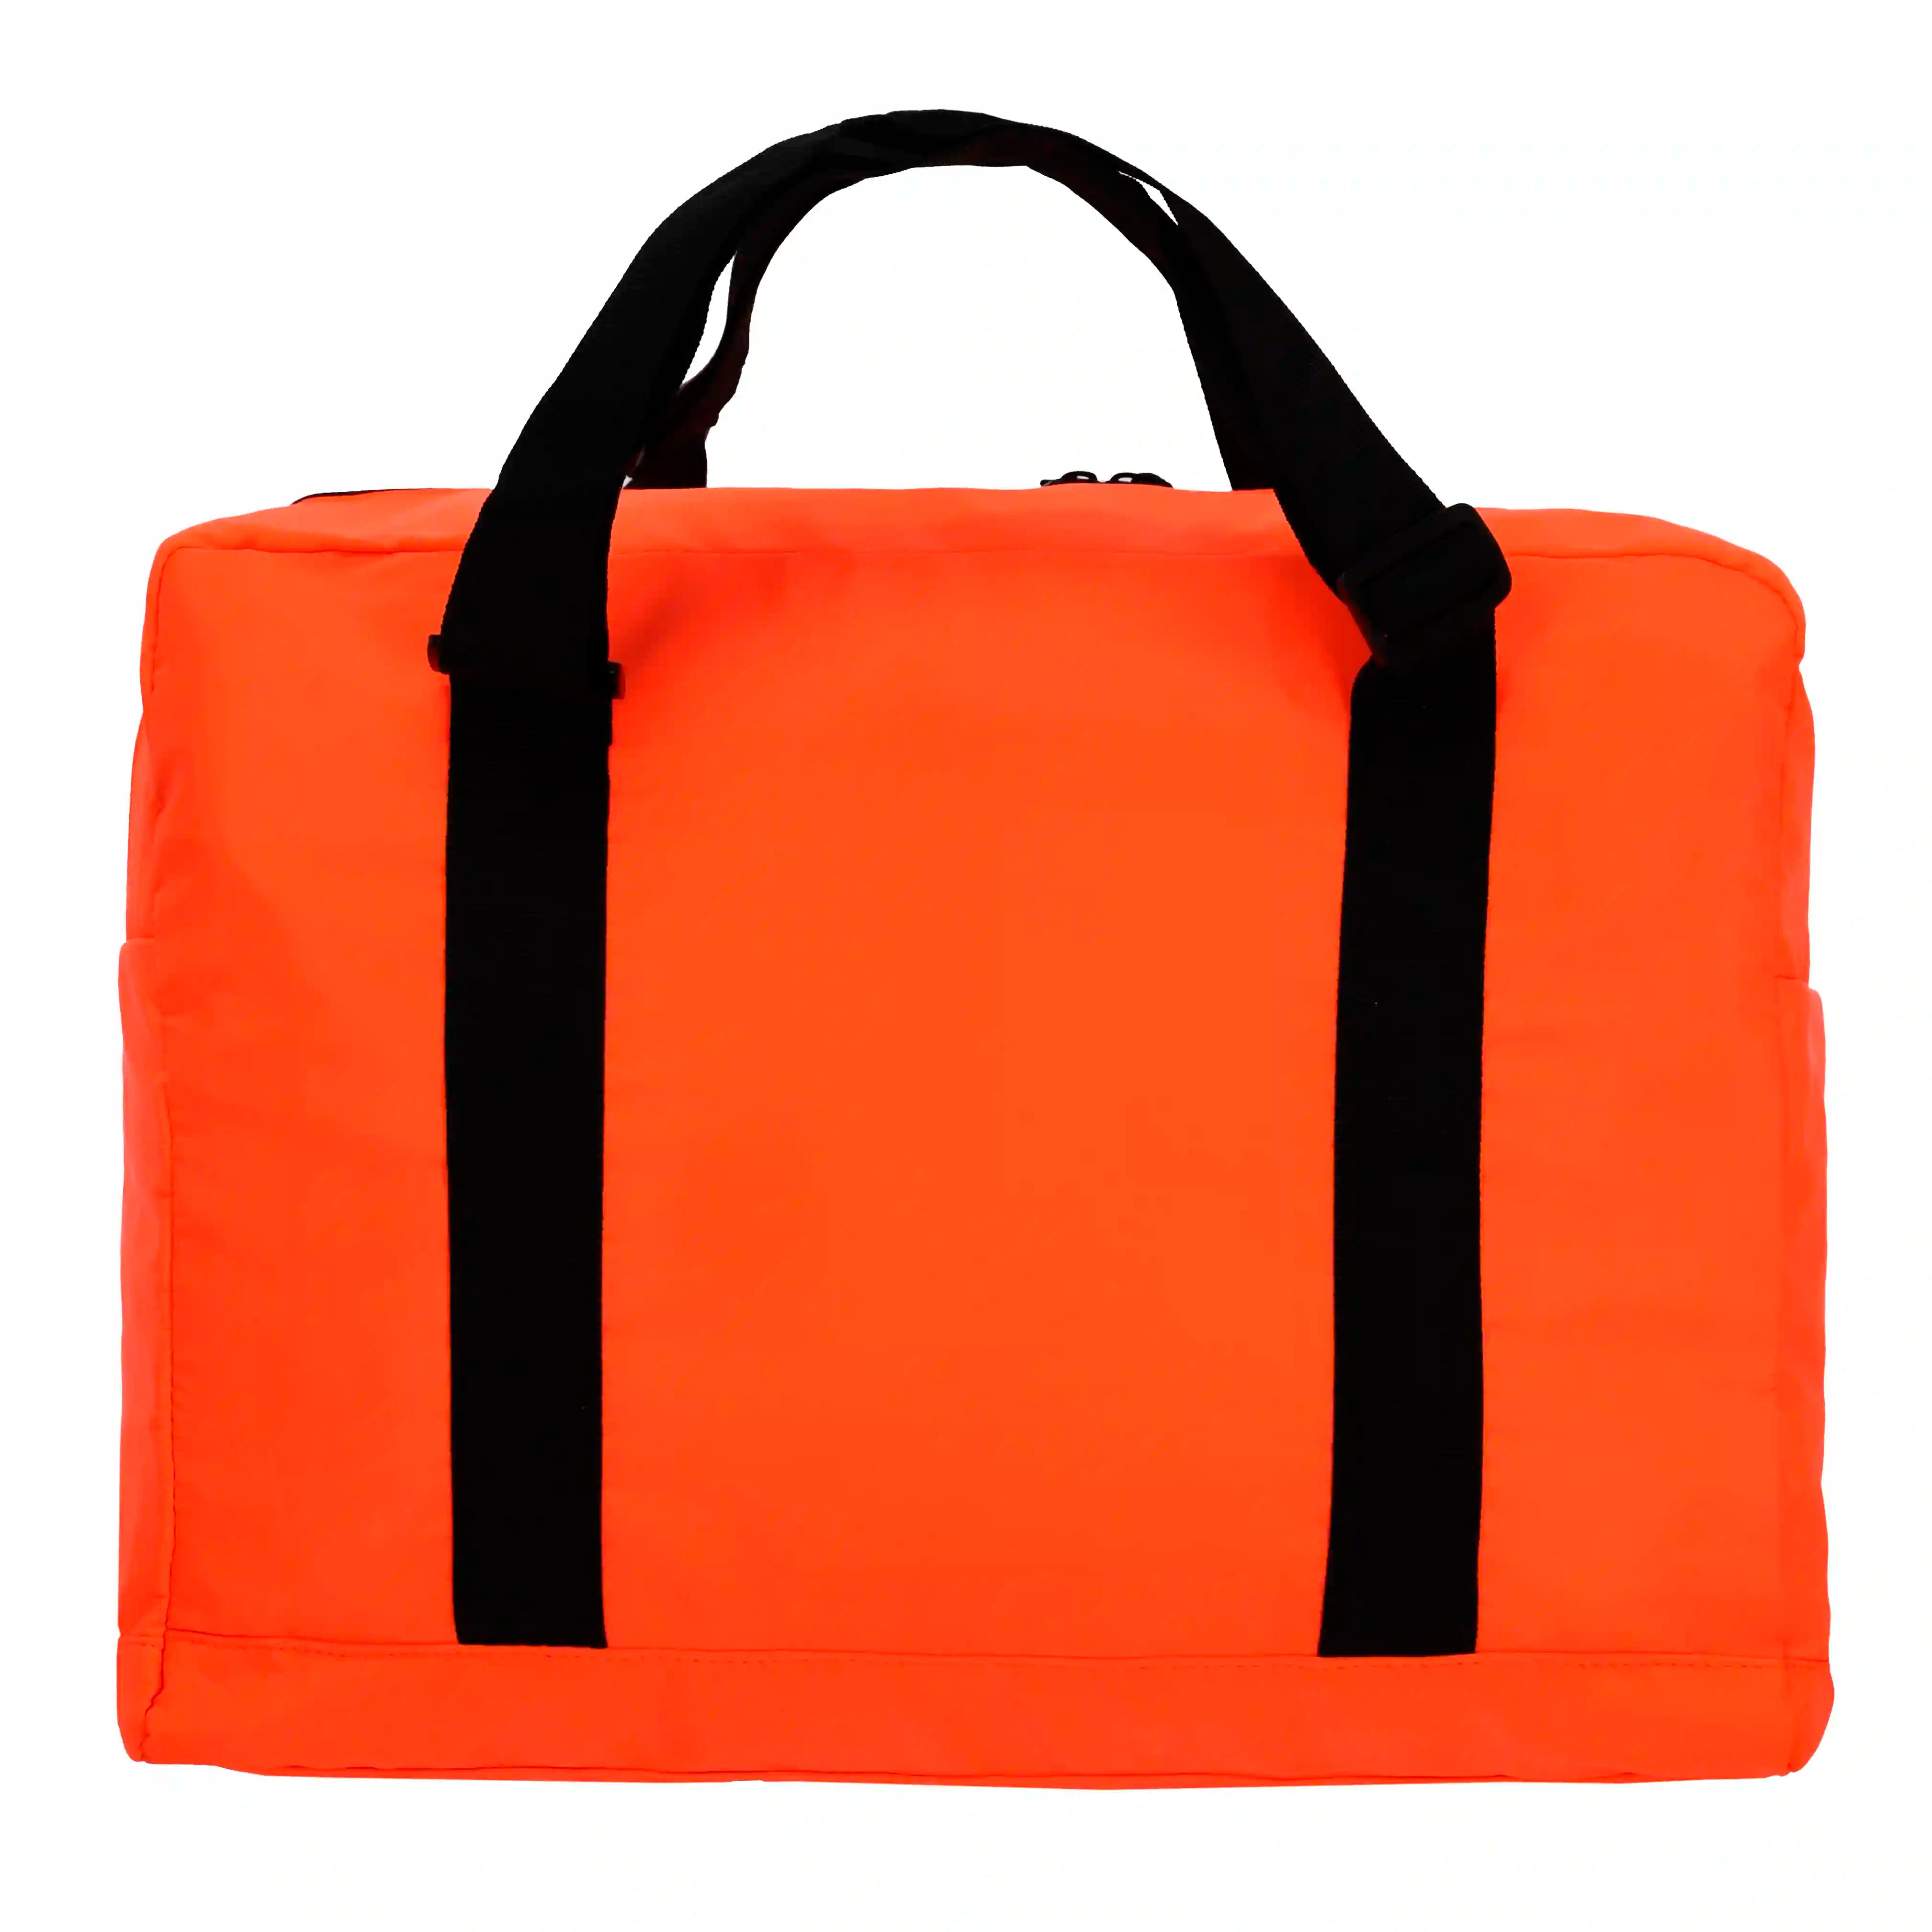 Travelite Accessories Folding Travel Bag 44 cm - Black